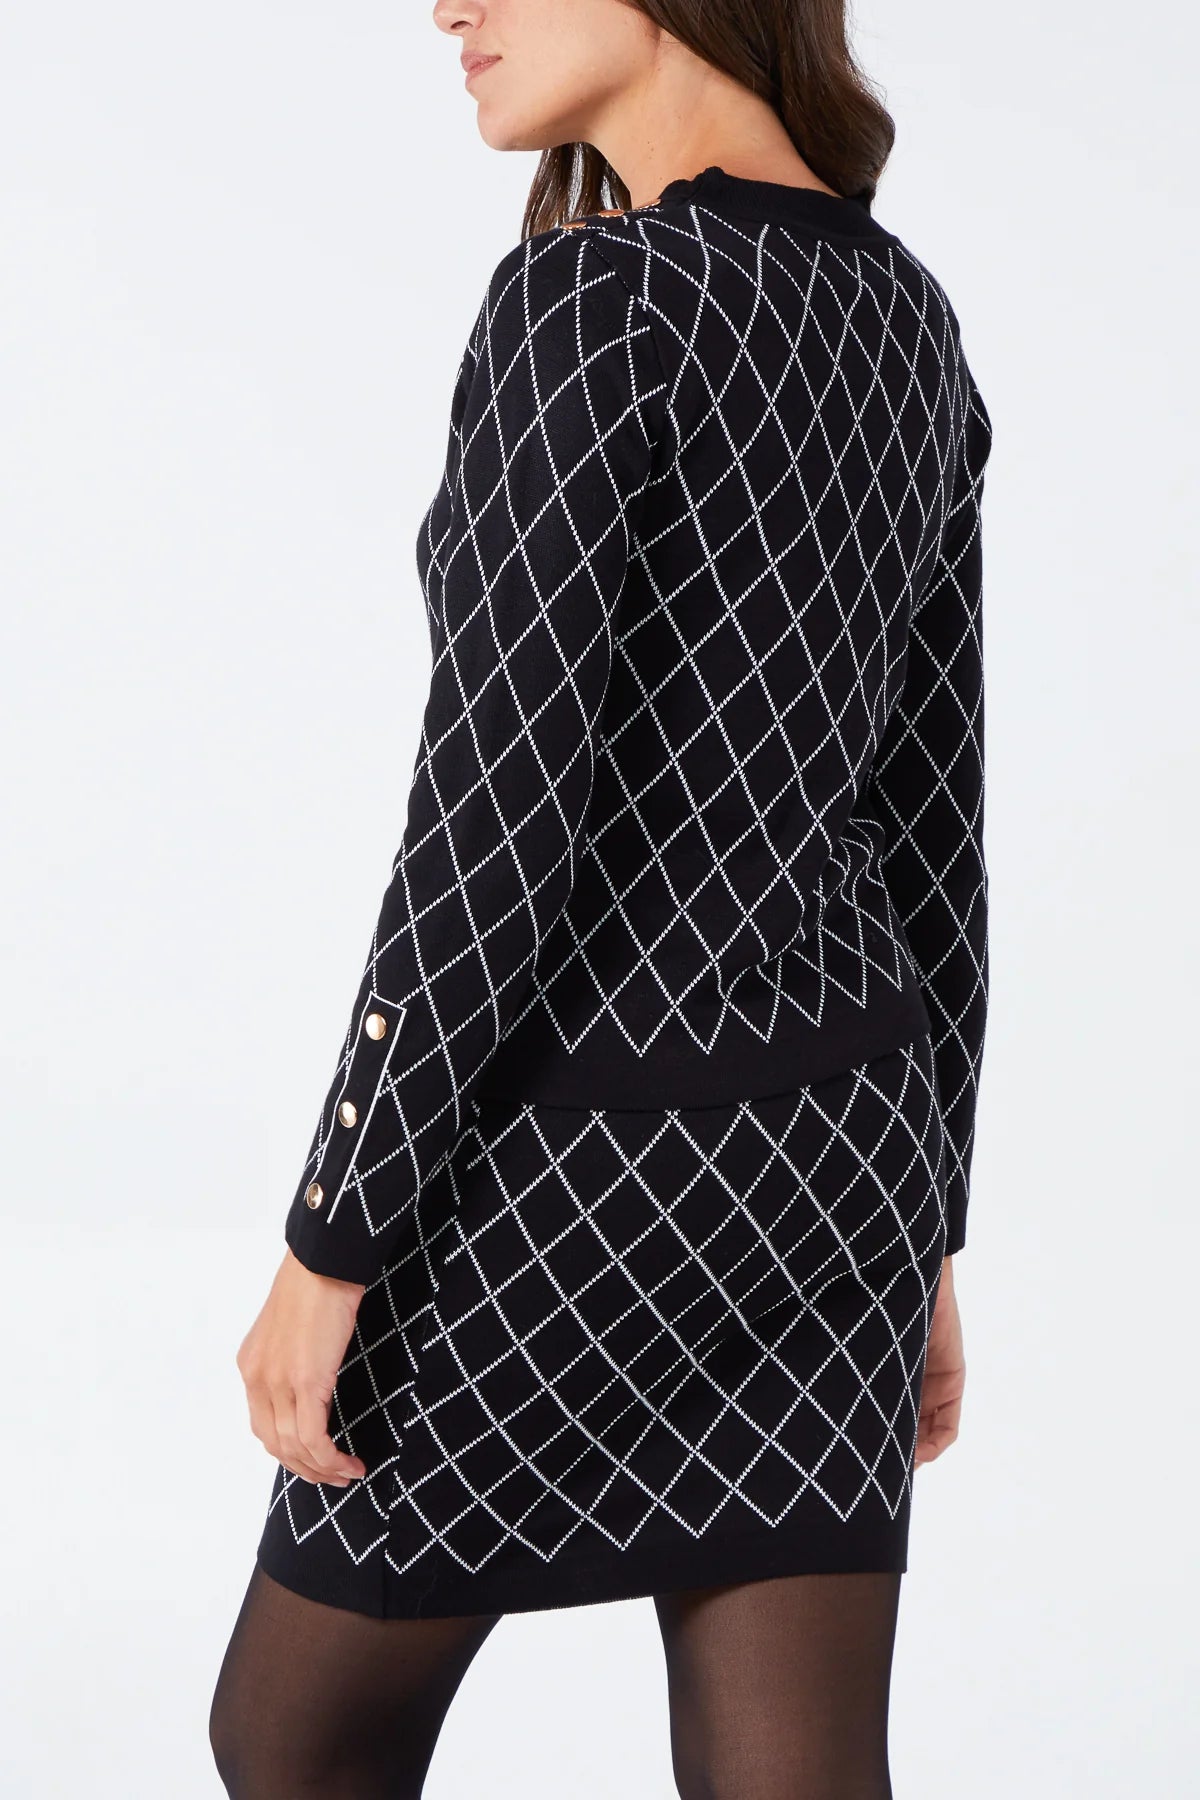 Marley Diamond Pattern Knit Top & Skirt